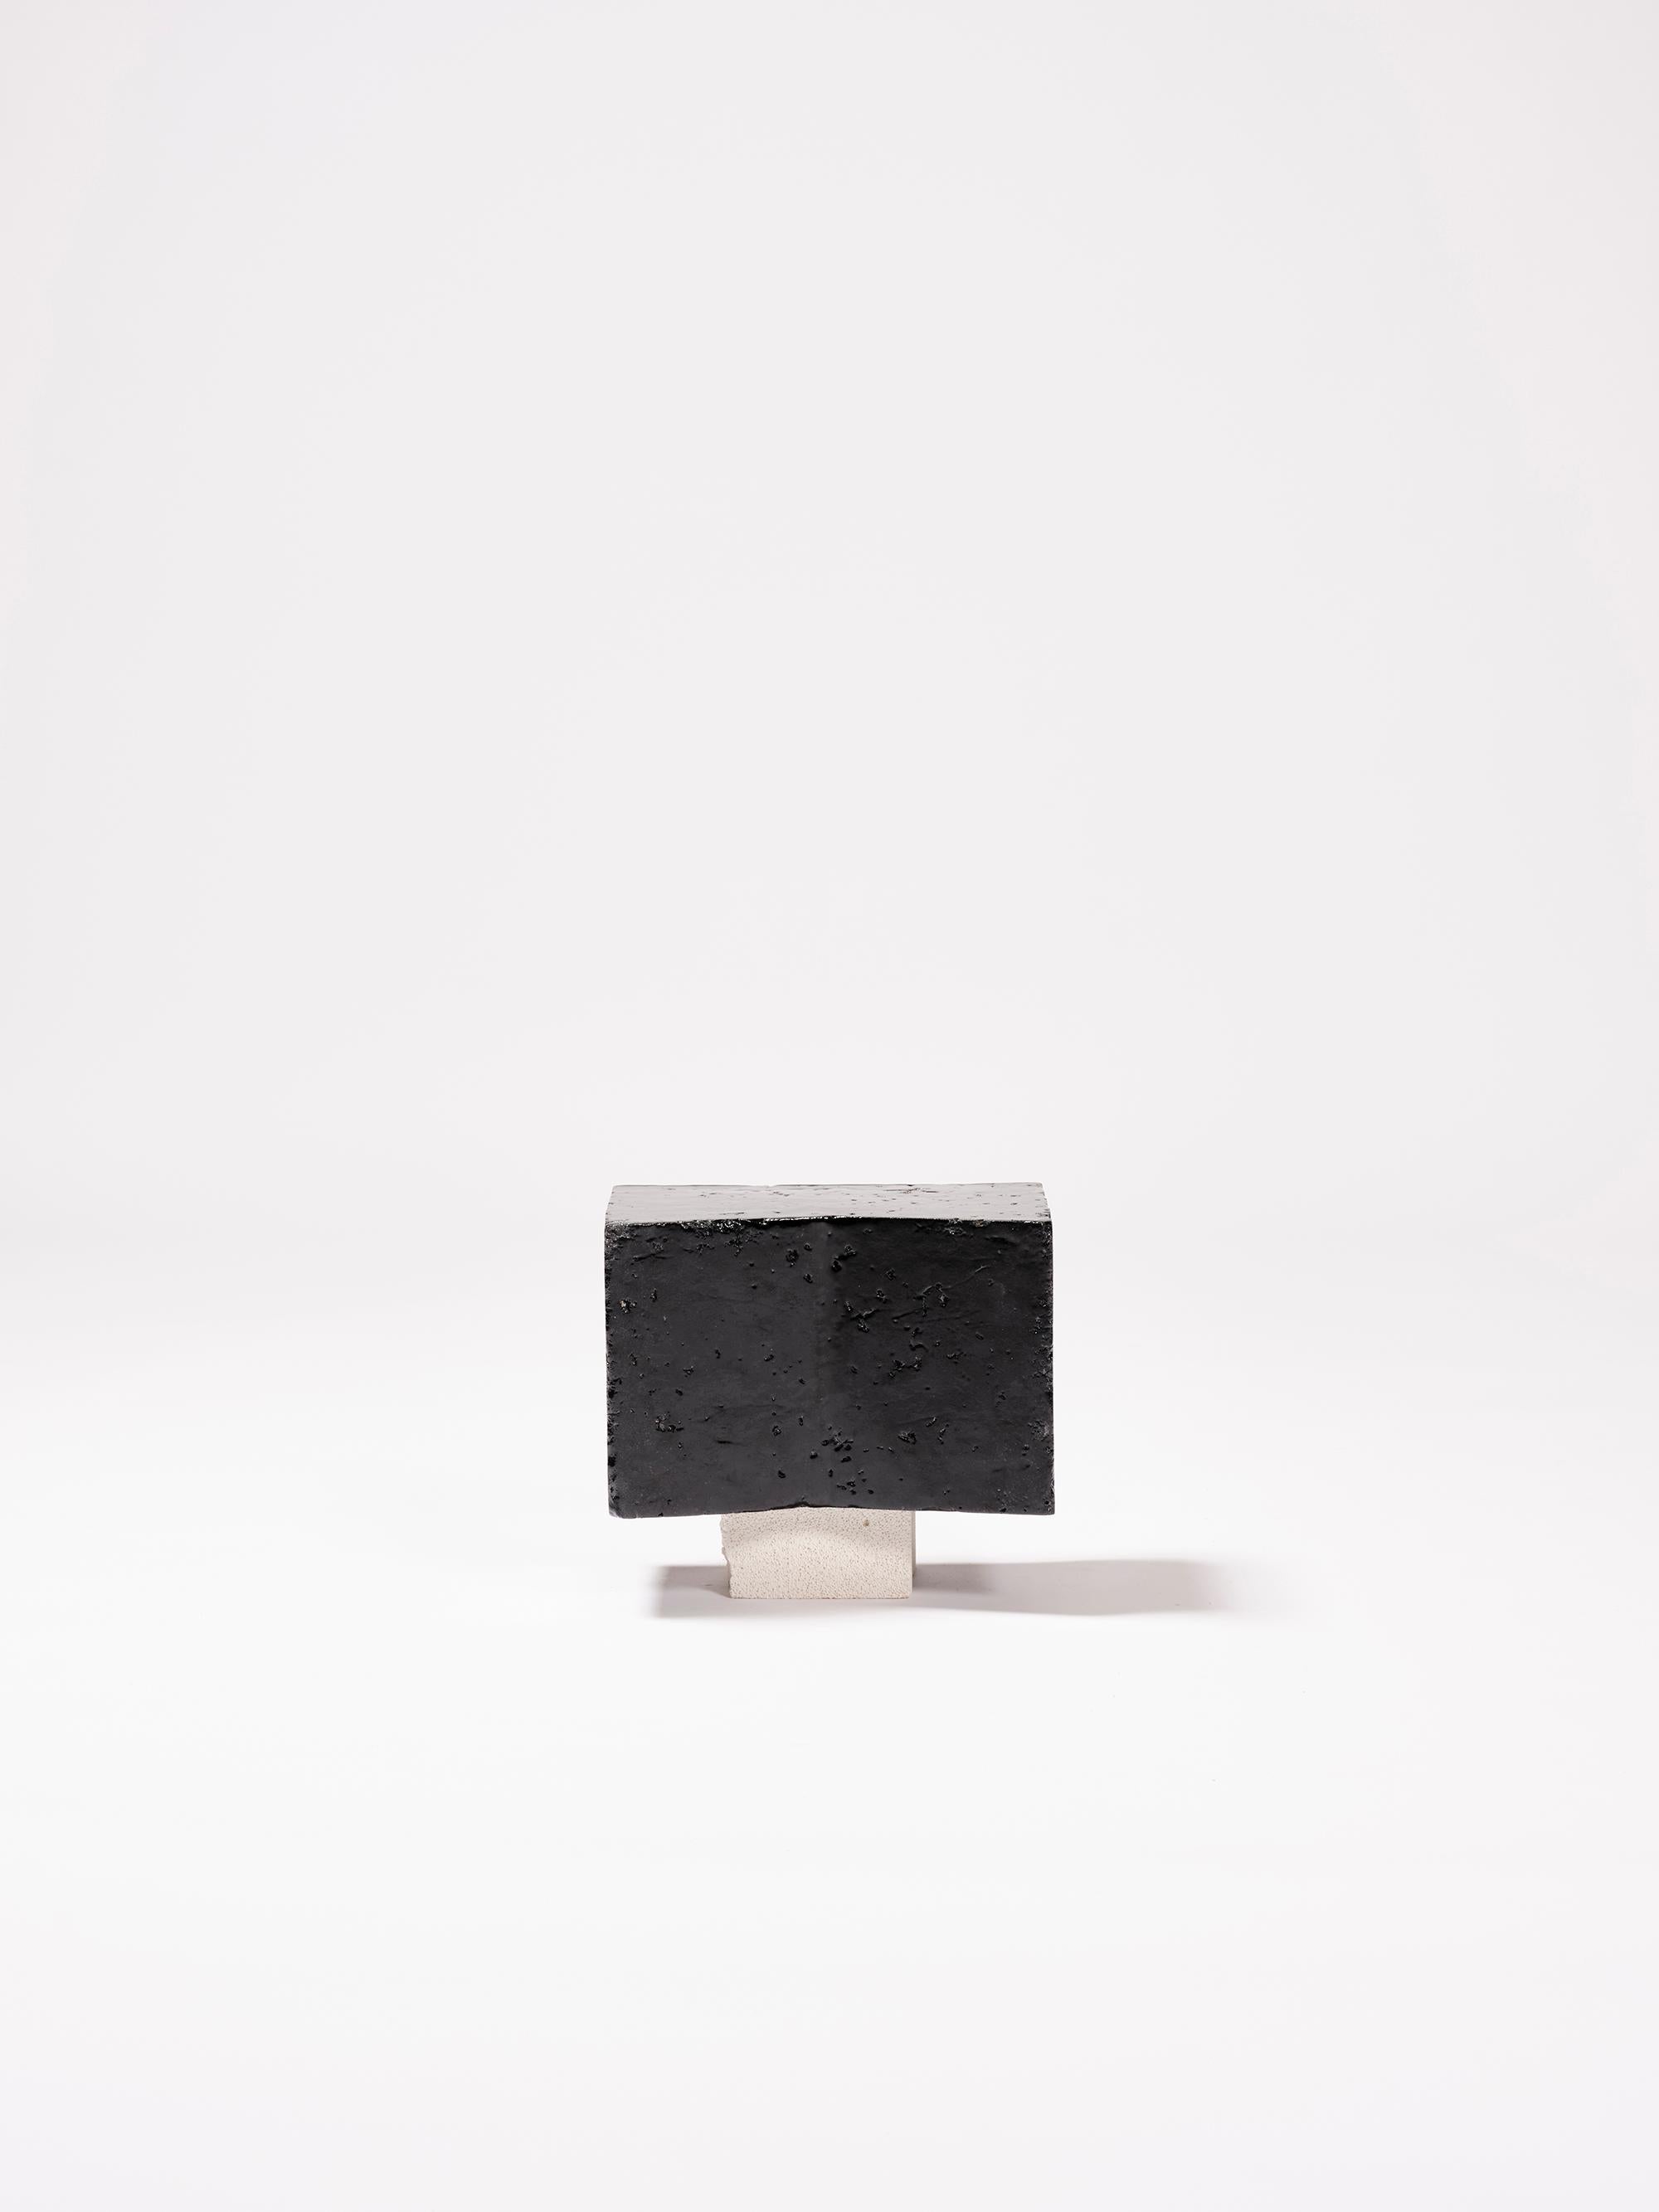 Contemporary Ceramic Table Lectern Reading Desk Glazed Earthenware Black For Sale 1